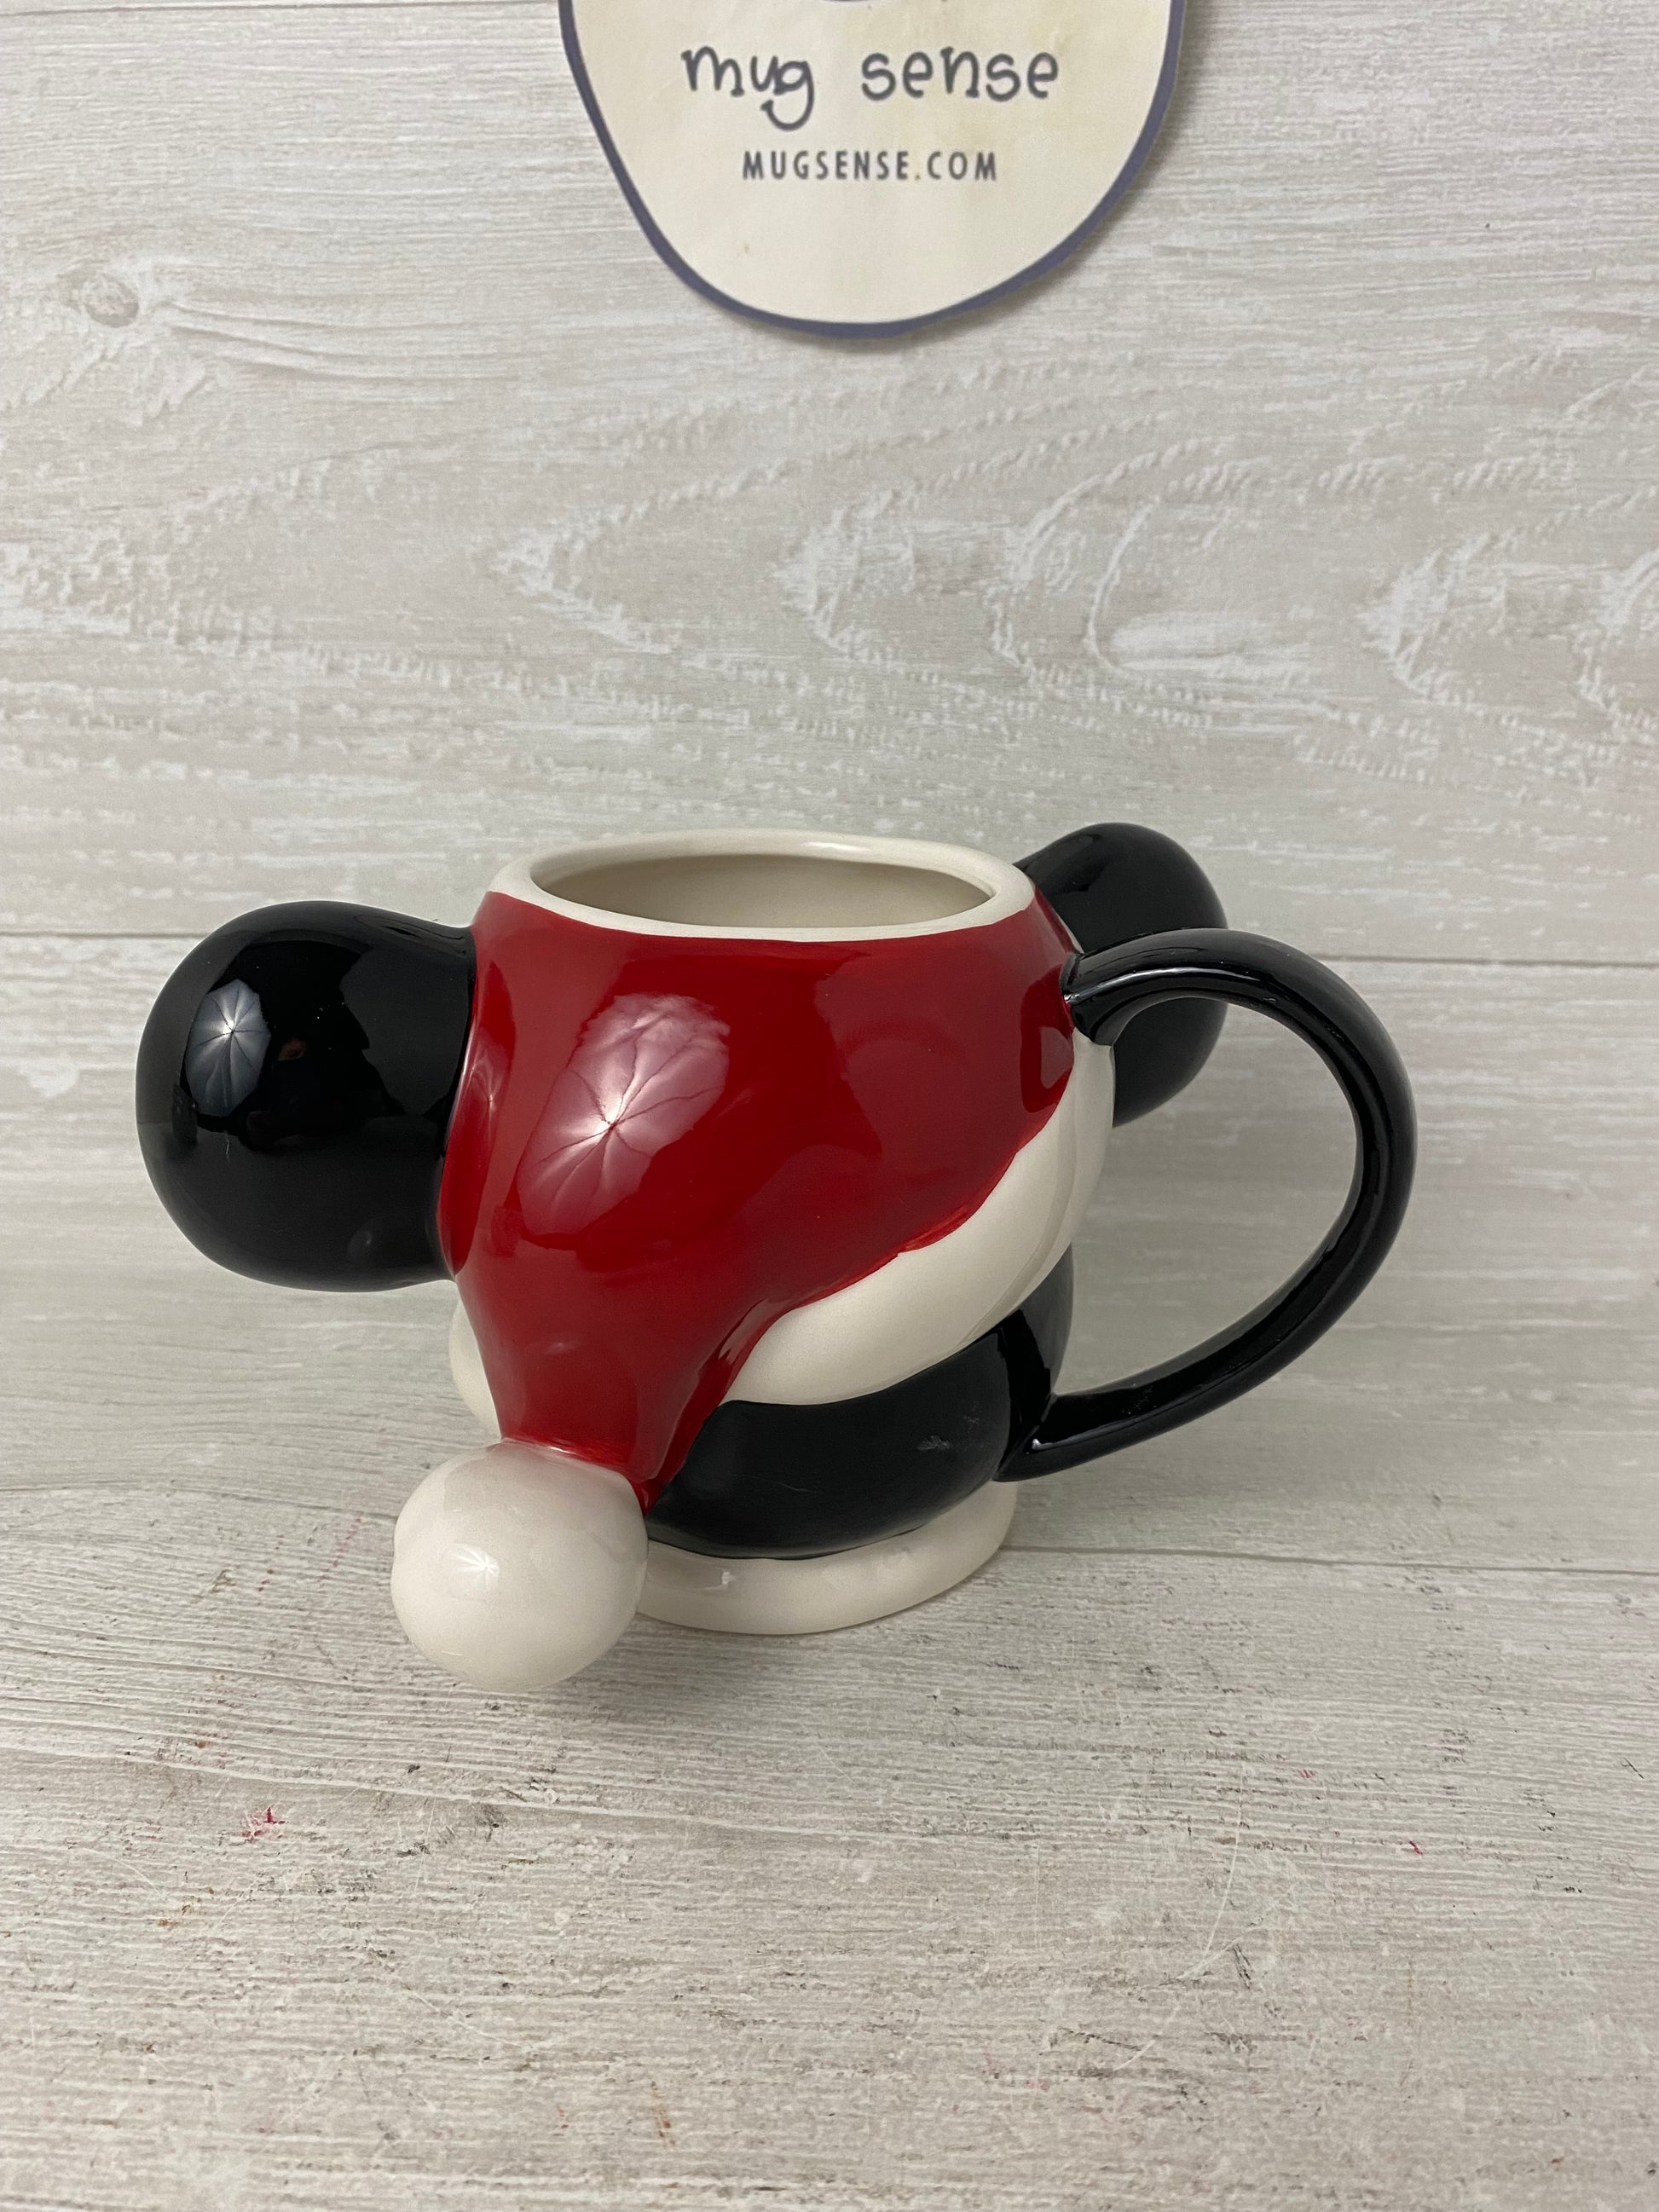 Disney Mickey & Minnie Snowman Building Ceramic Christmas Mug with Ears  Handle